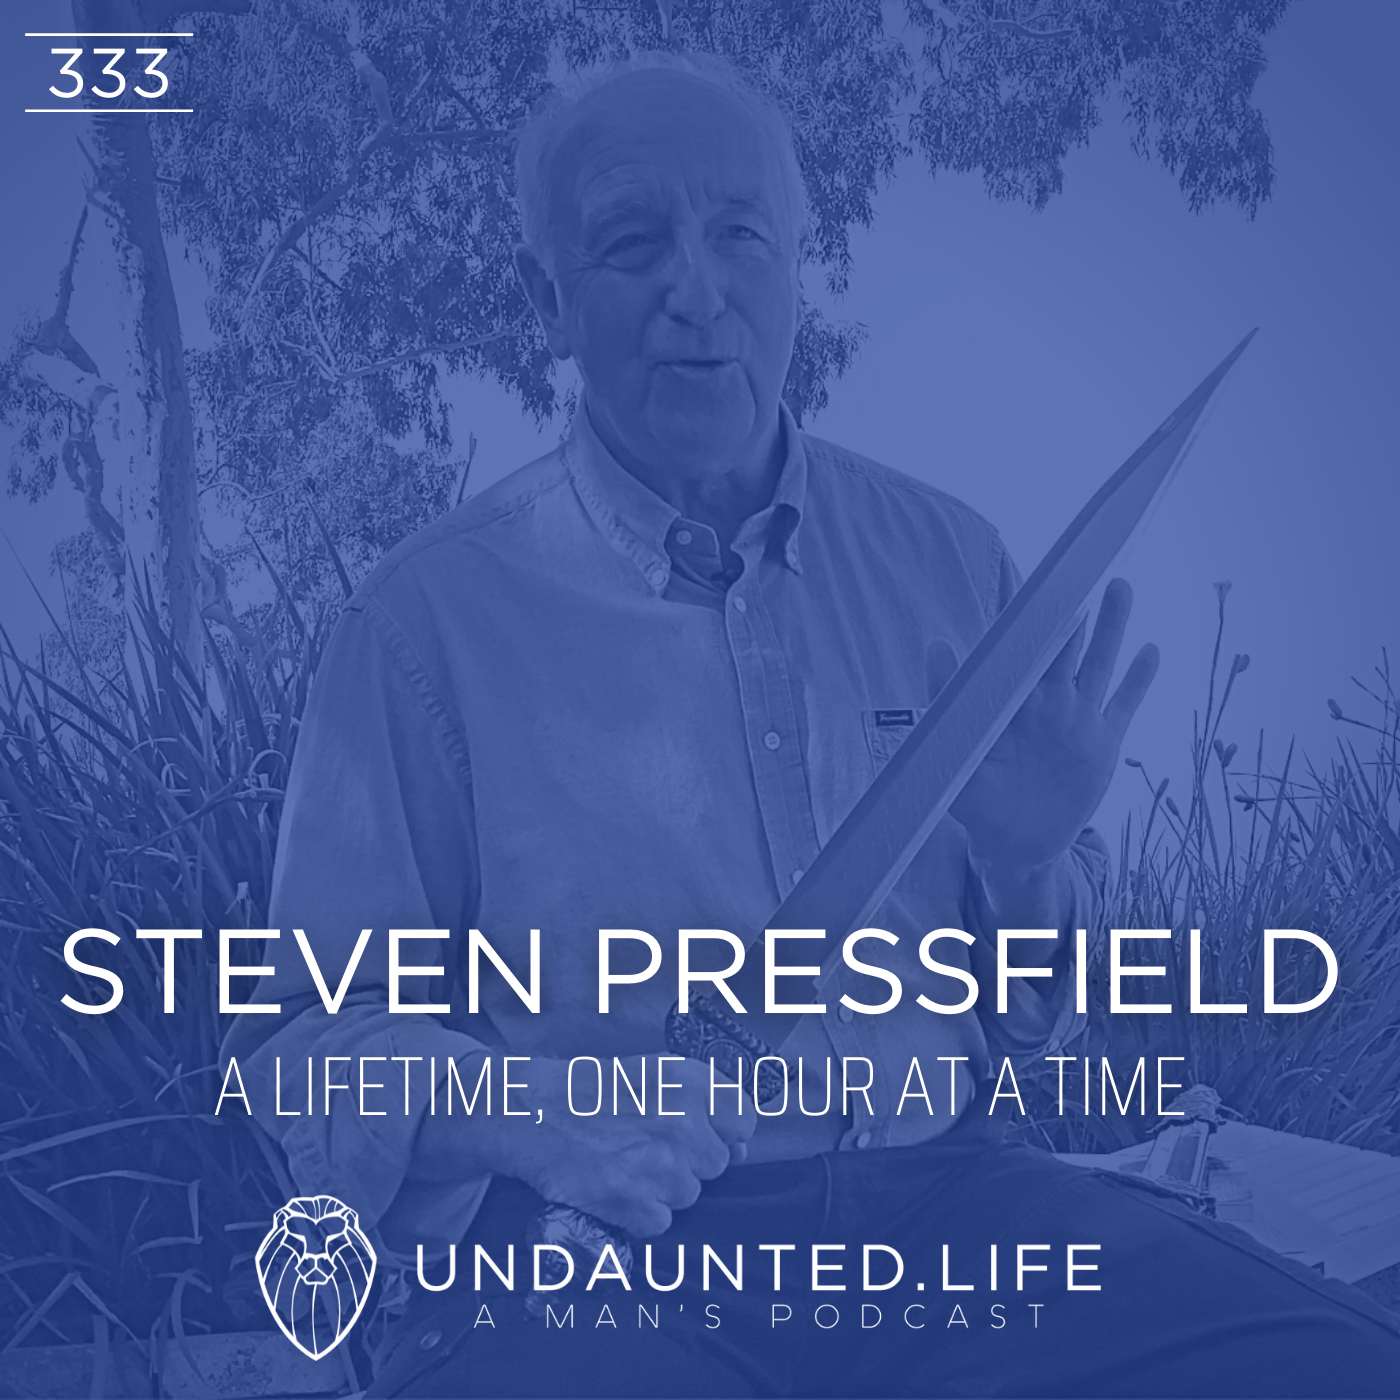 About  Steven Pressfield